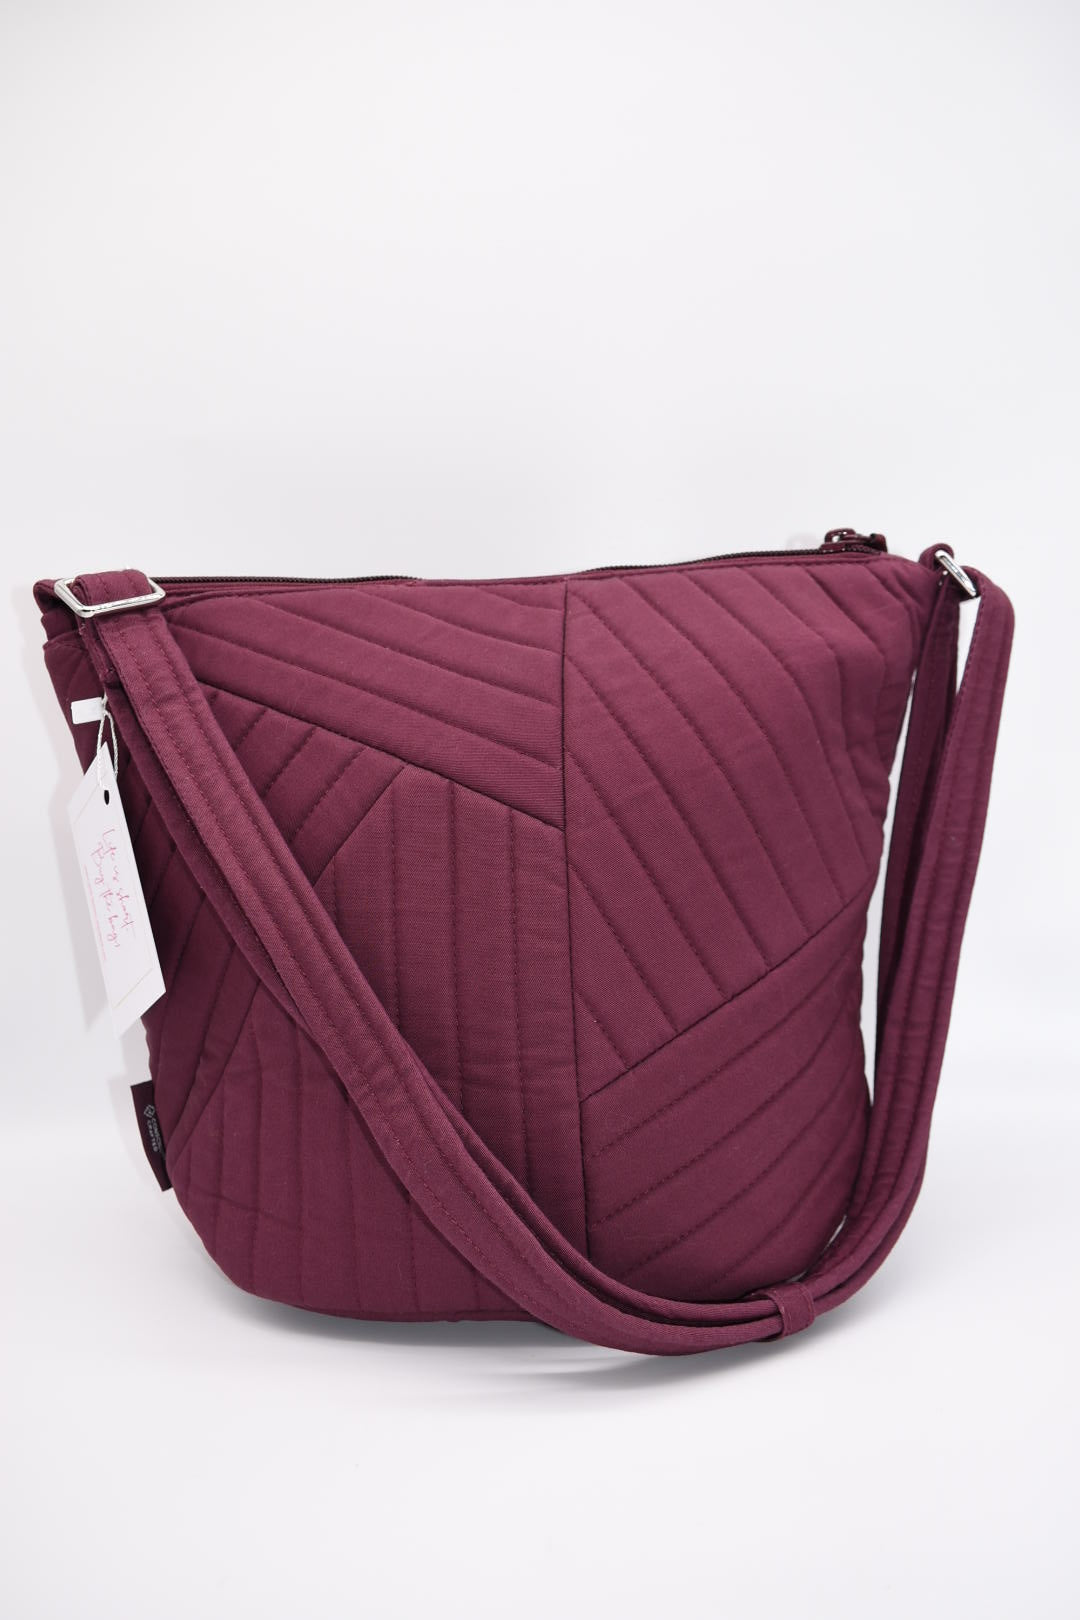 Vera Bradley Bucket Crossbody Bag in "Mulled Wine" Color